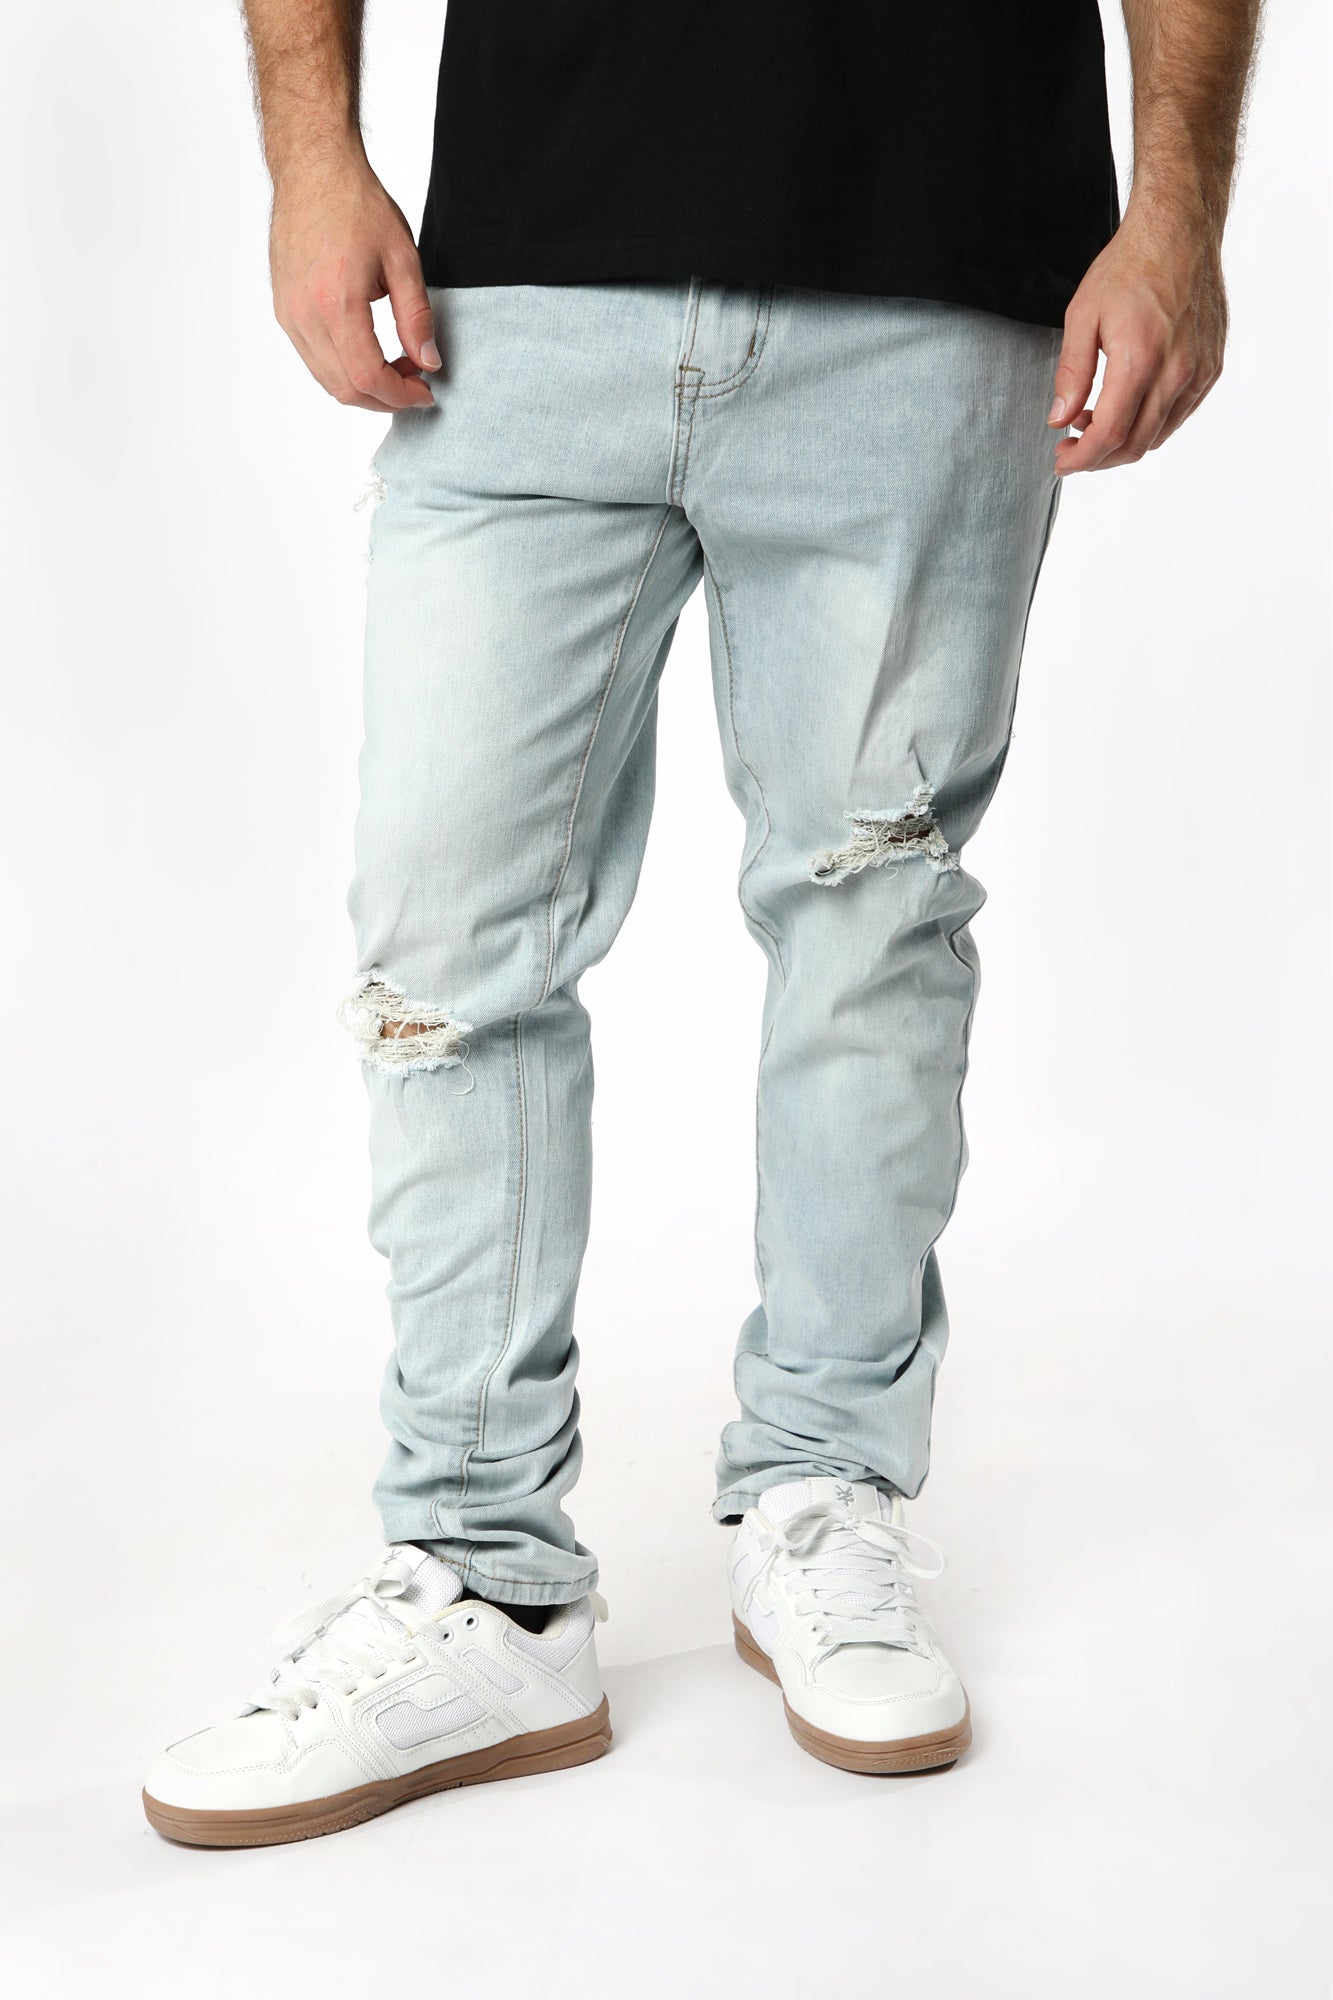 West49 Mens Distressed Skinny Jeans - Light Blue /